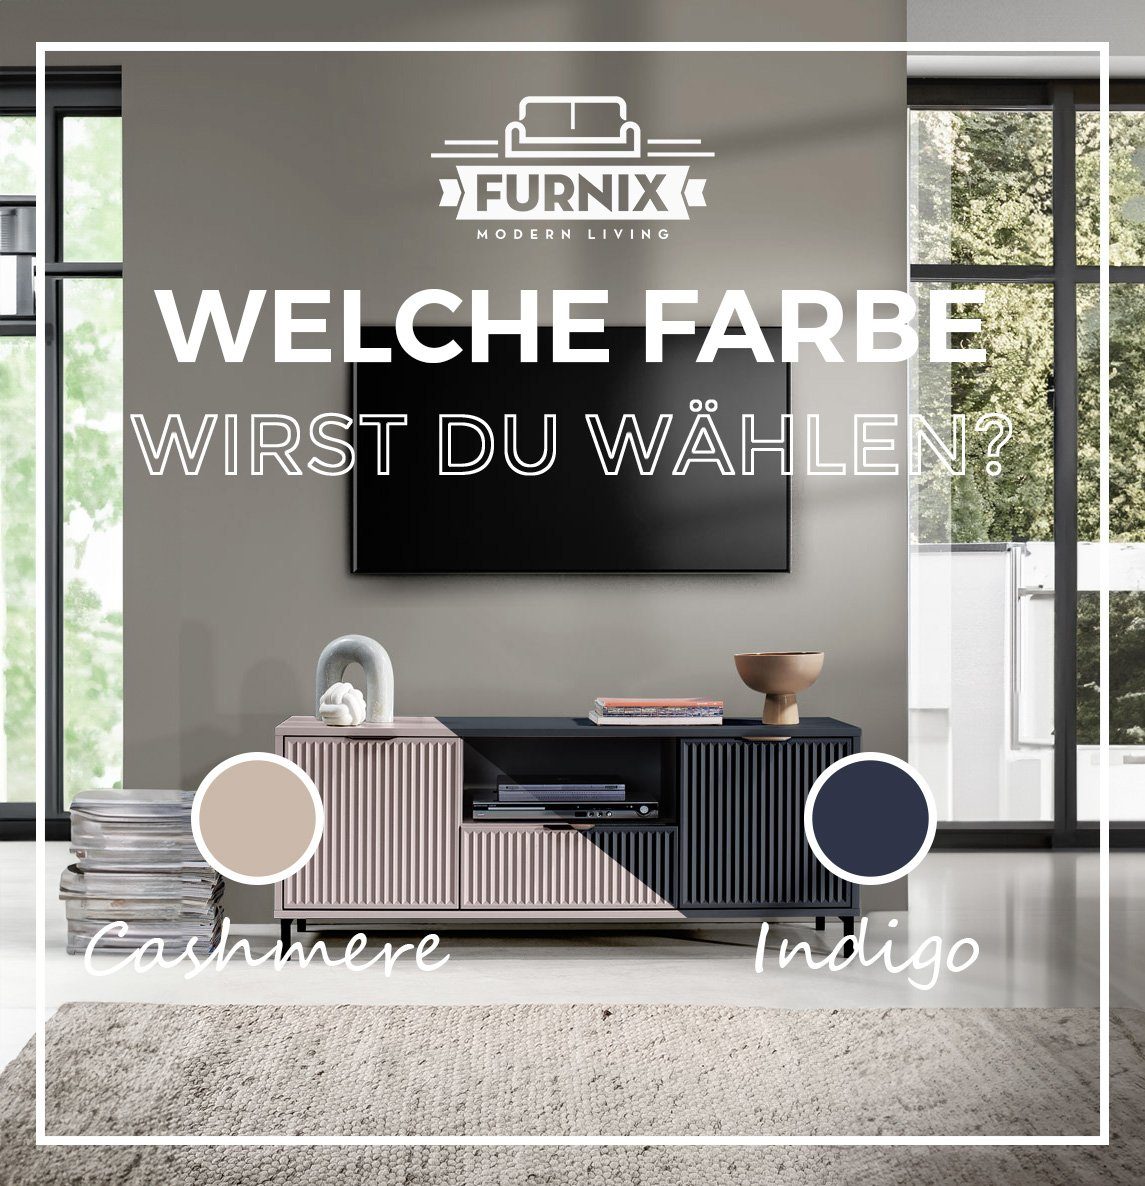 Furnix TV-Board H55,6 cm Türen mit B135 T40,6 2 LINKI Schublade, Loft-Design LS3 in Blickfang, cm und 1 TV-Kommode Industrial, Kaschmir x x